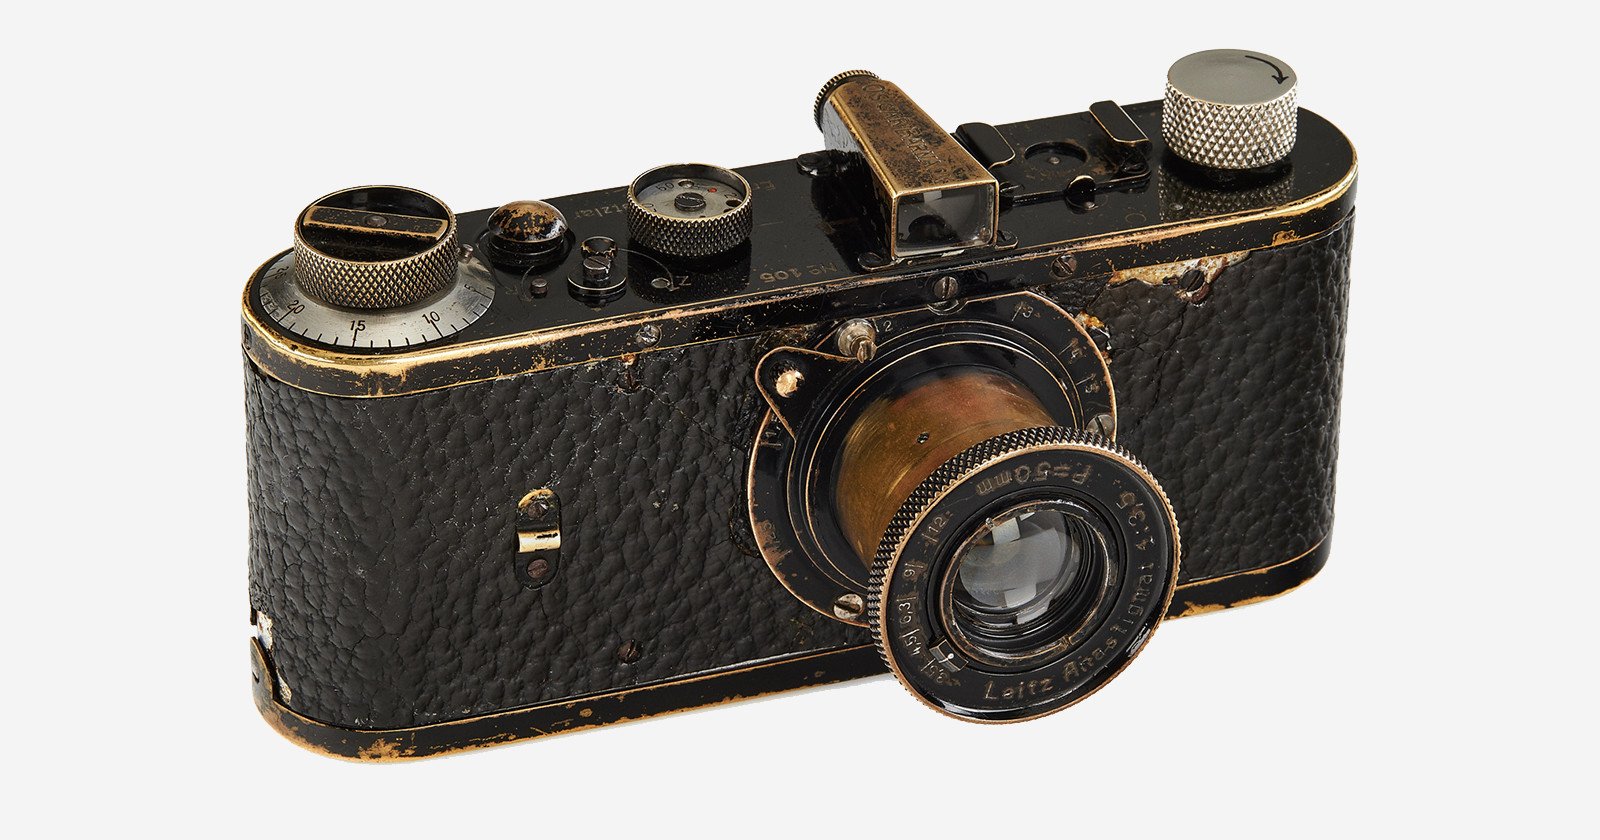 Oskar Barnacks Leica Sells for $15M, is Now Worlds Priciest Camera